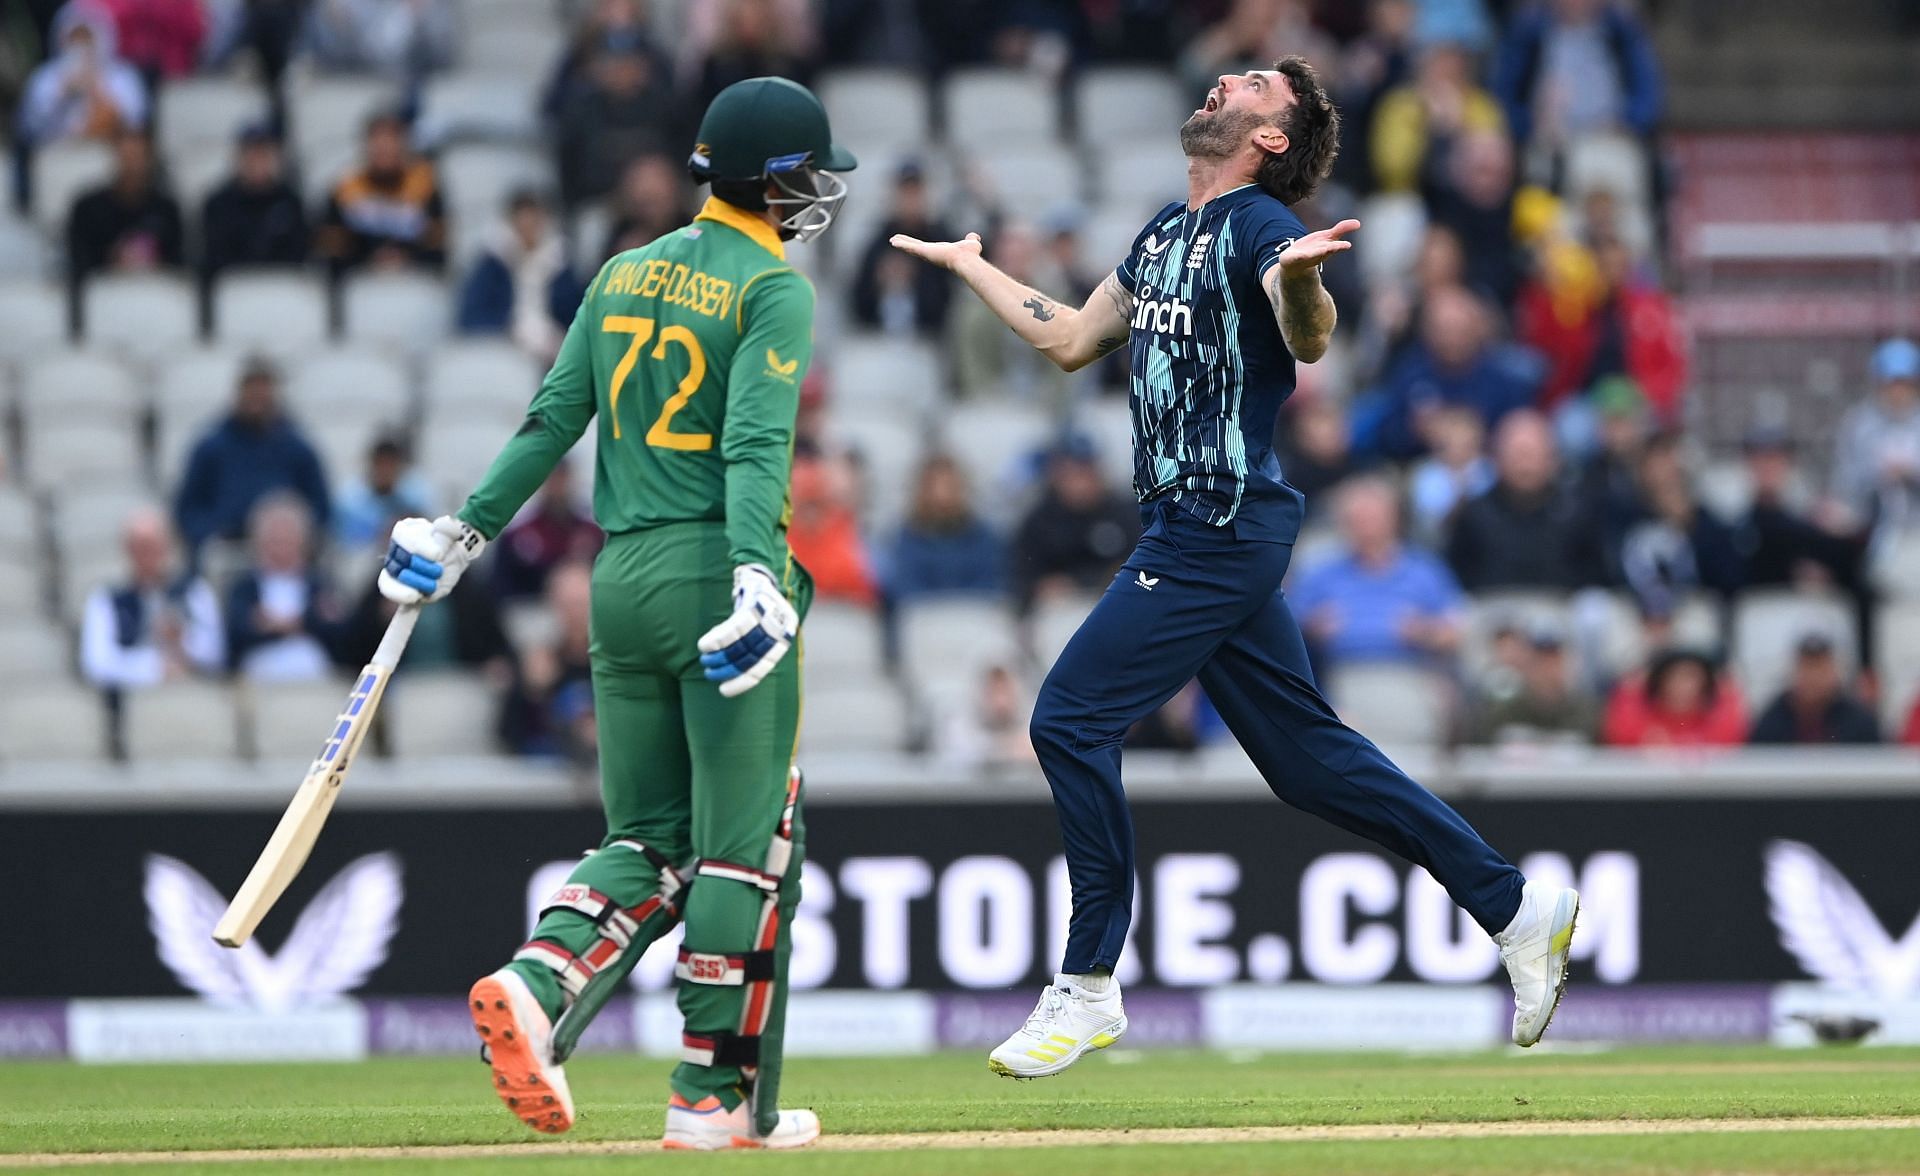 Reece Topley celebrates a wicket. (Credits: Twitter)